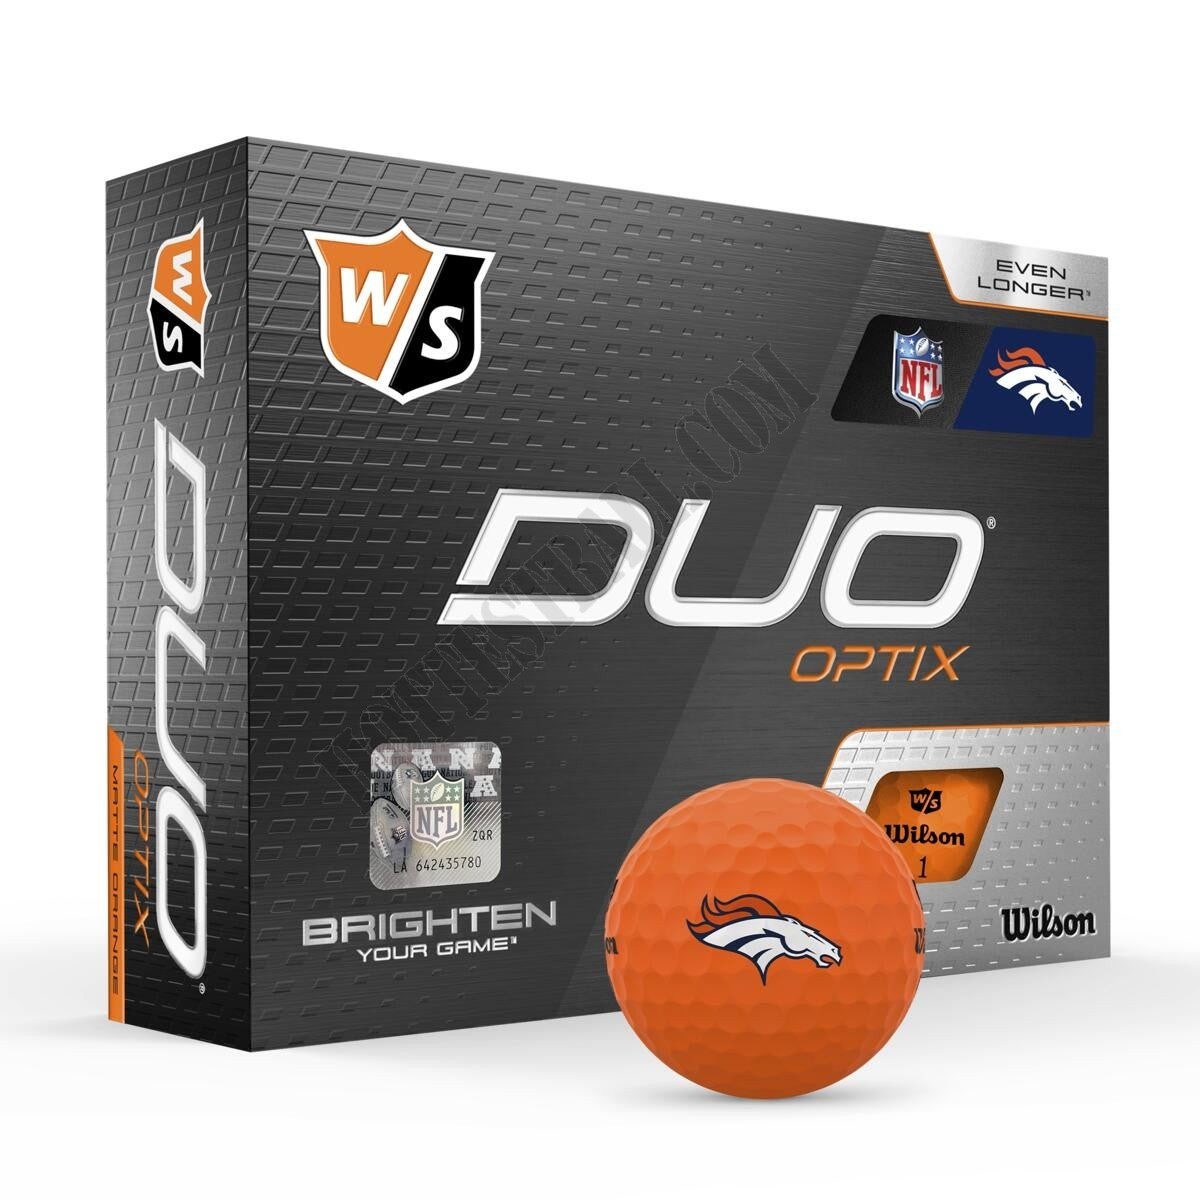 Duo Optix NFL Golf Balls - Denver Broncos ● Wilson Promotions - Duo Optix NFL Golf Balls - Denver Broncos ● Wilson Promotions